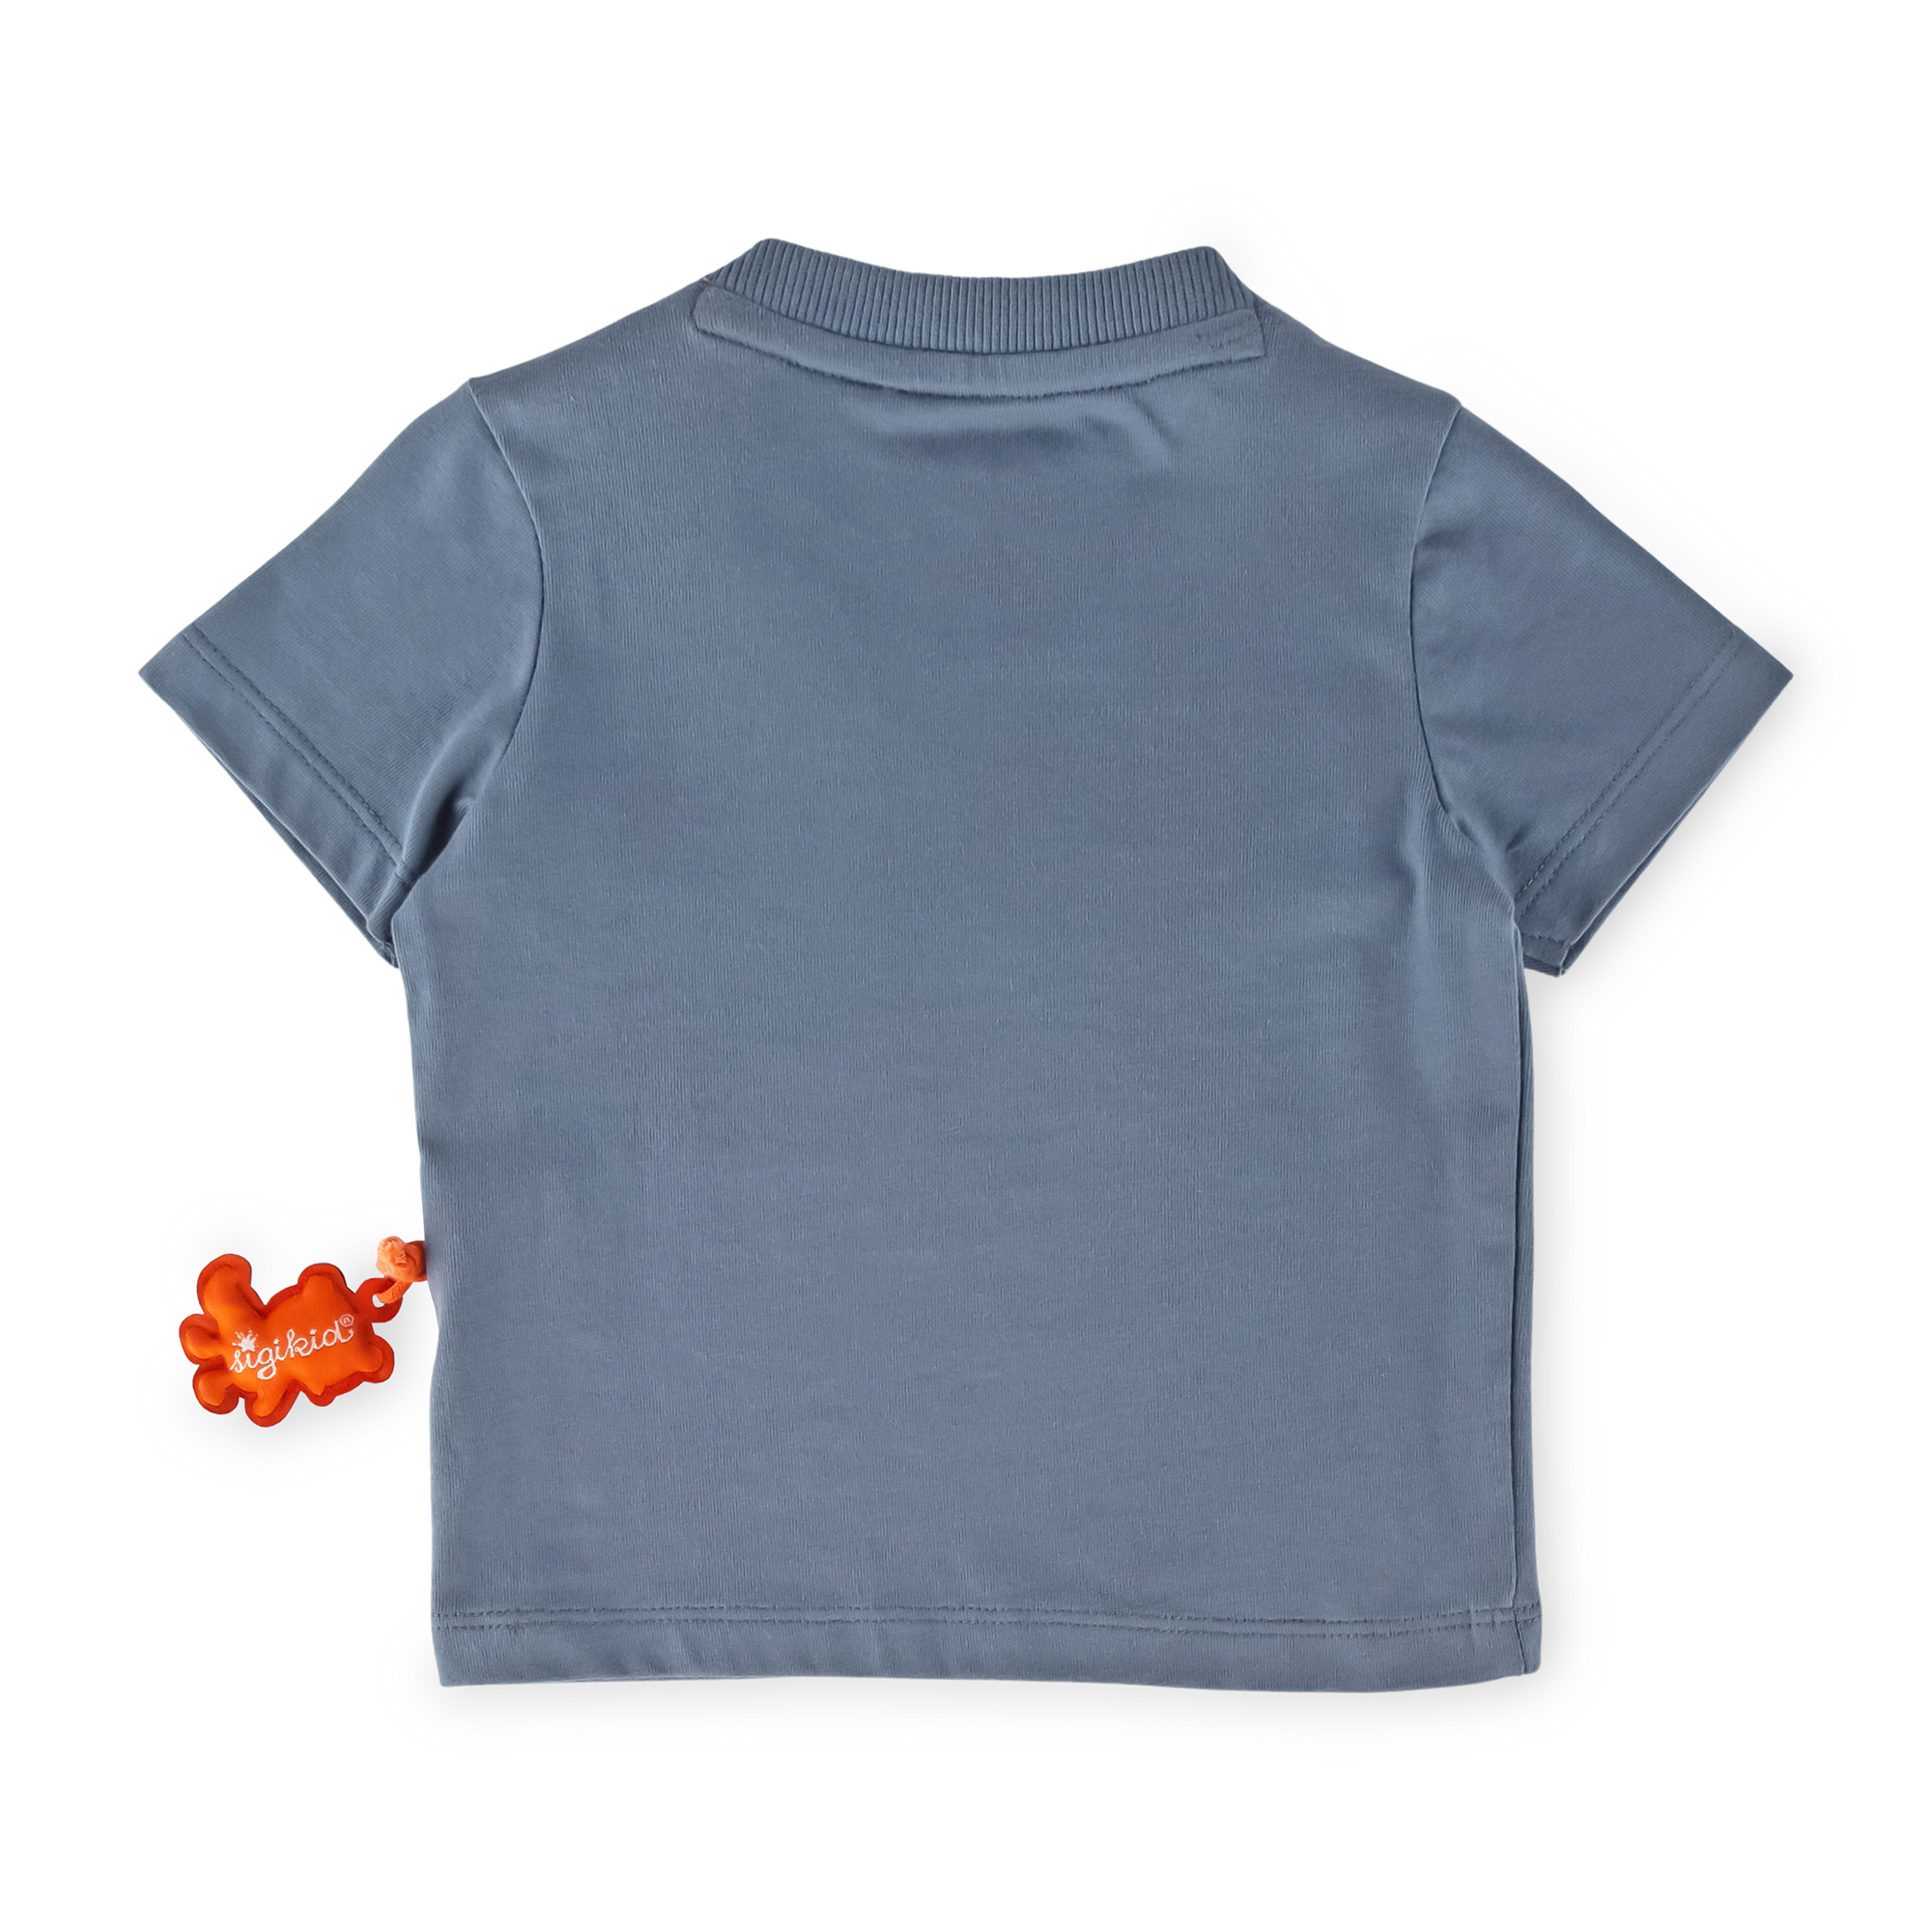 Blaues Baby T-Shirt mit Tiger Motiv, blau